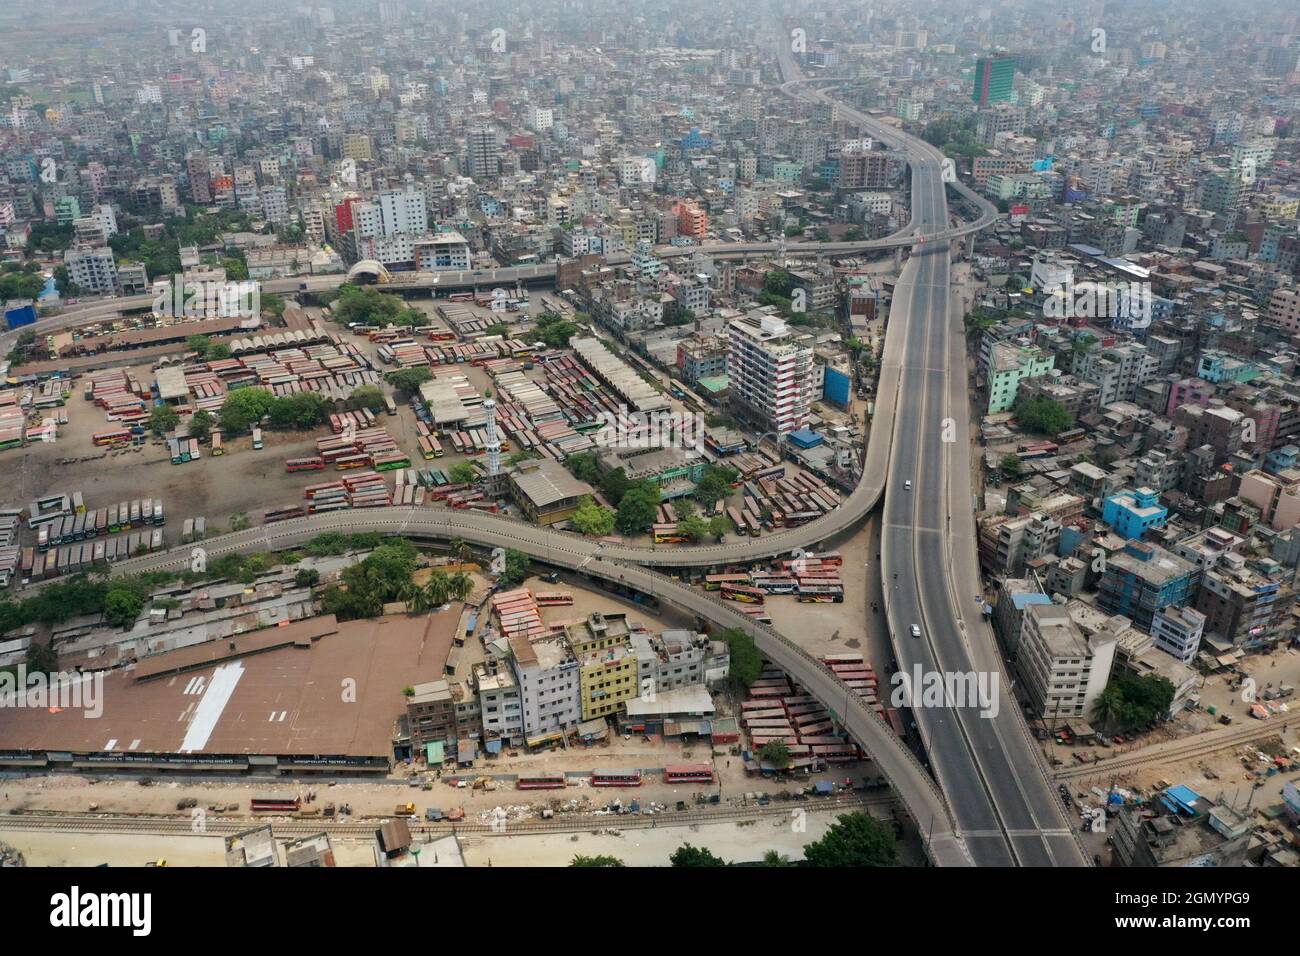 Dhaka, Bangladesh - April 15, 2021: The Bird's-eye view of Jatrabari area at Dhaka city in Bangladesh. Stock Photo